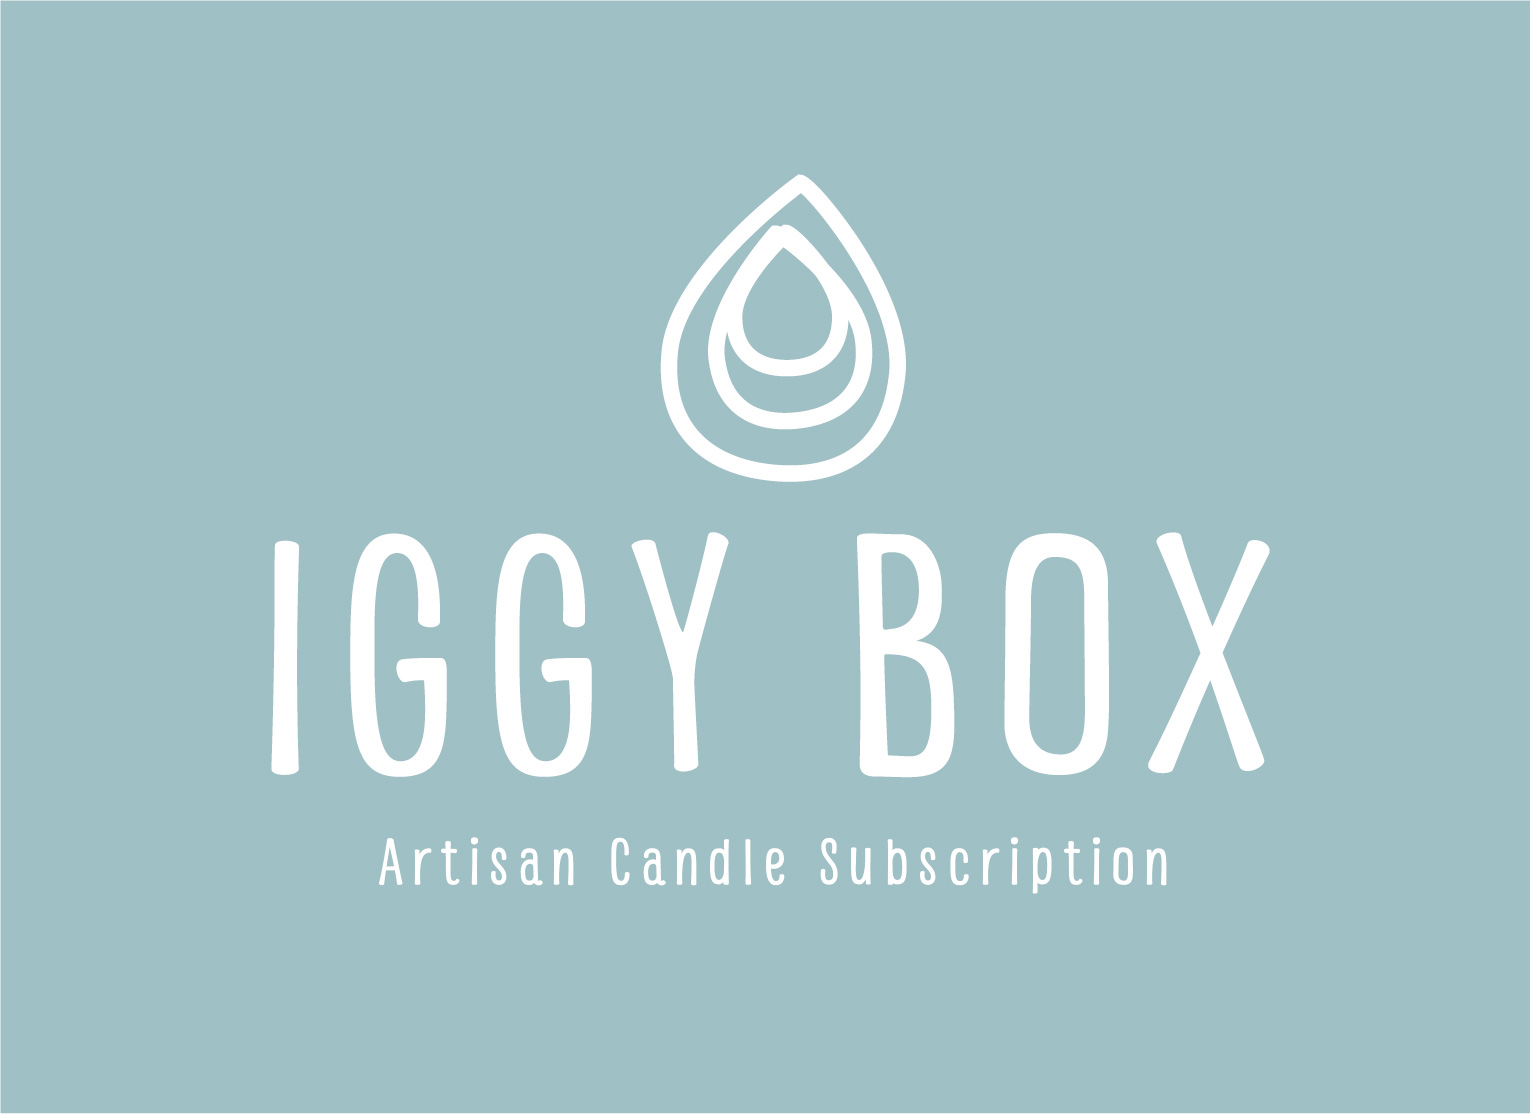 Iggy Box logo